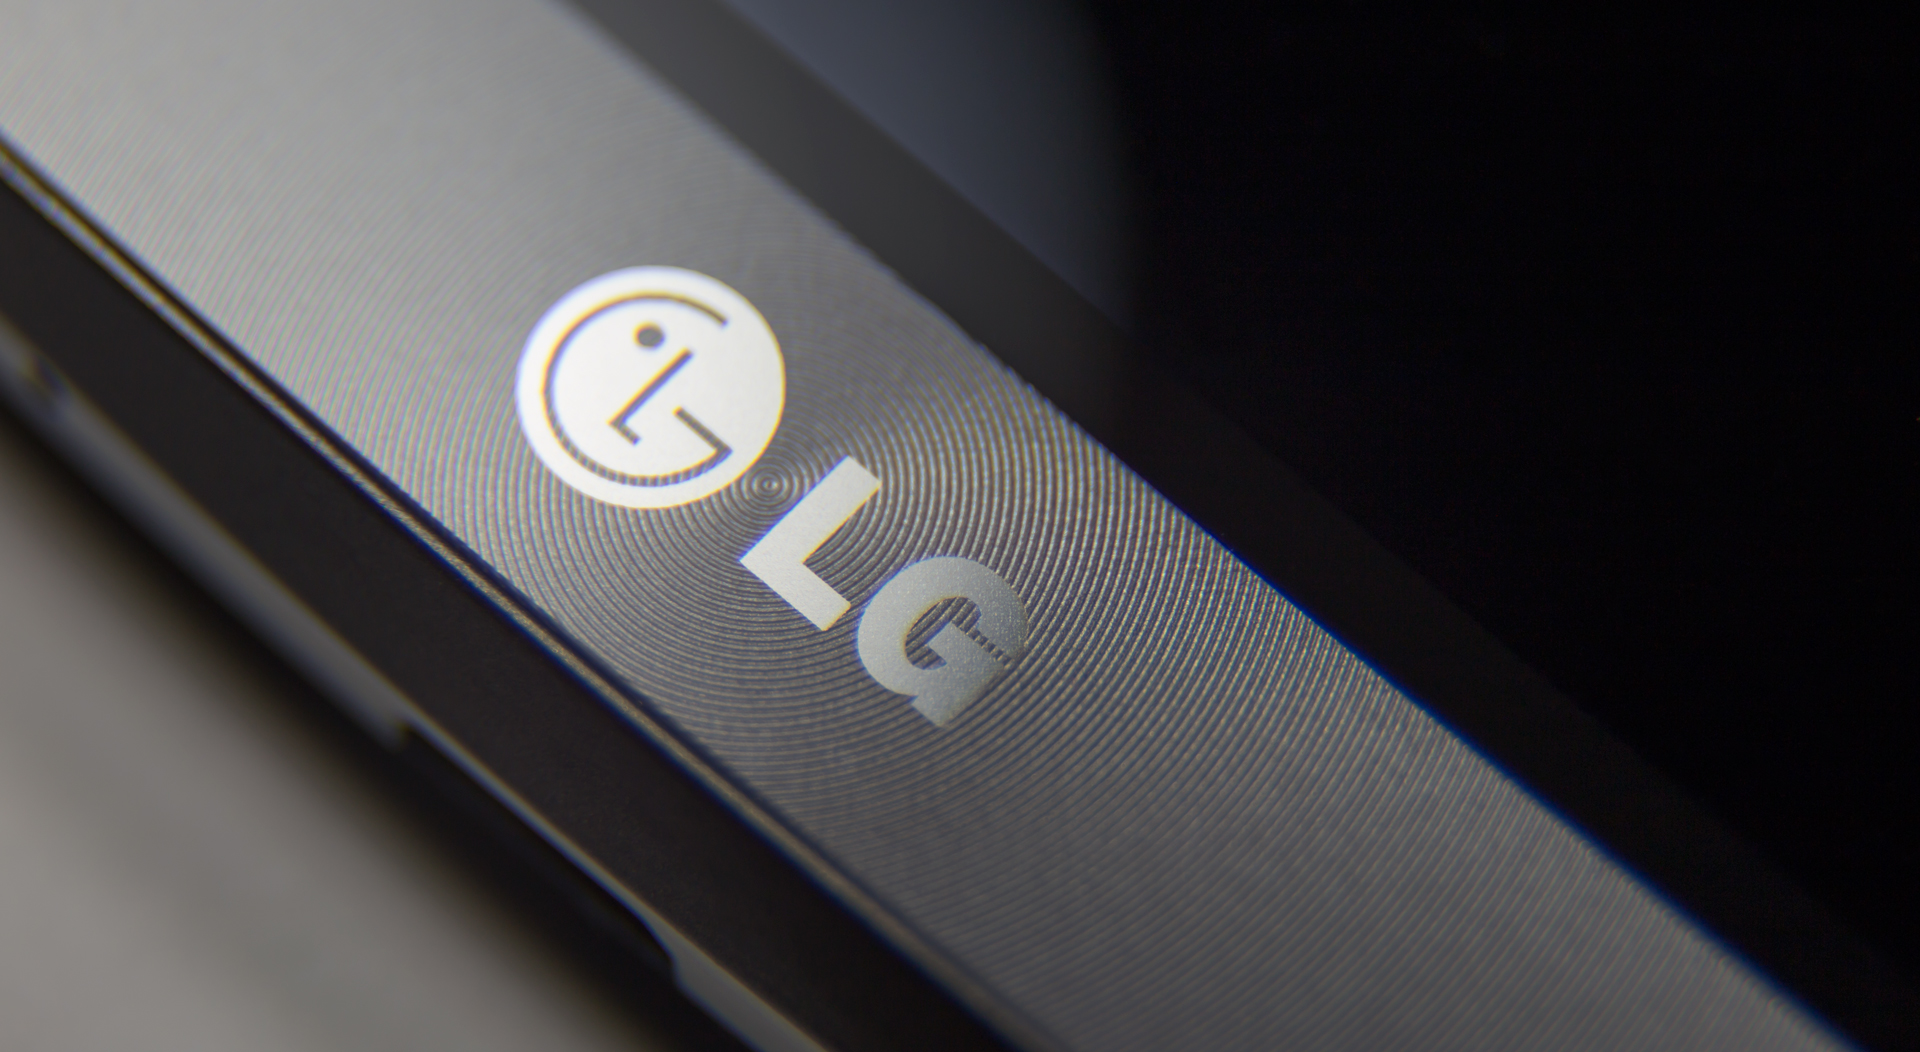 LG G4 ขยับเตรียมเปิดไปตัวเมษายนนี้ คาดเลี่ยงการชนกับ Galaxy S6